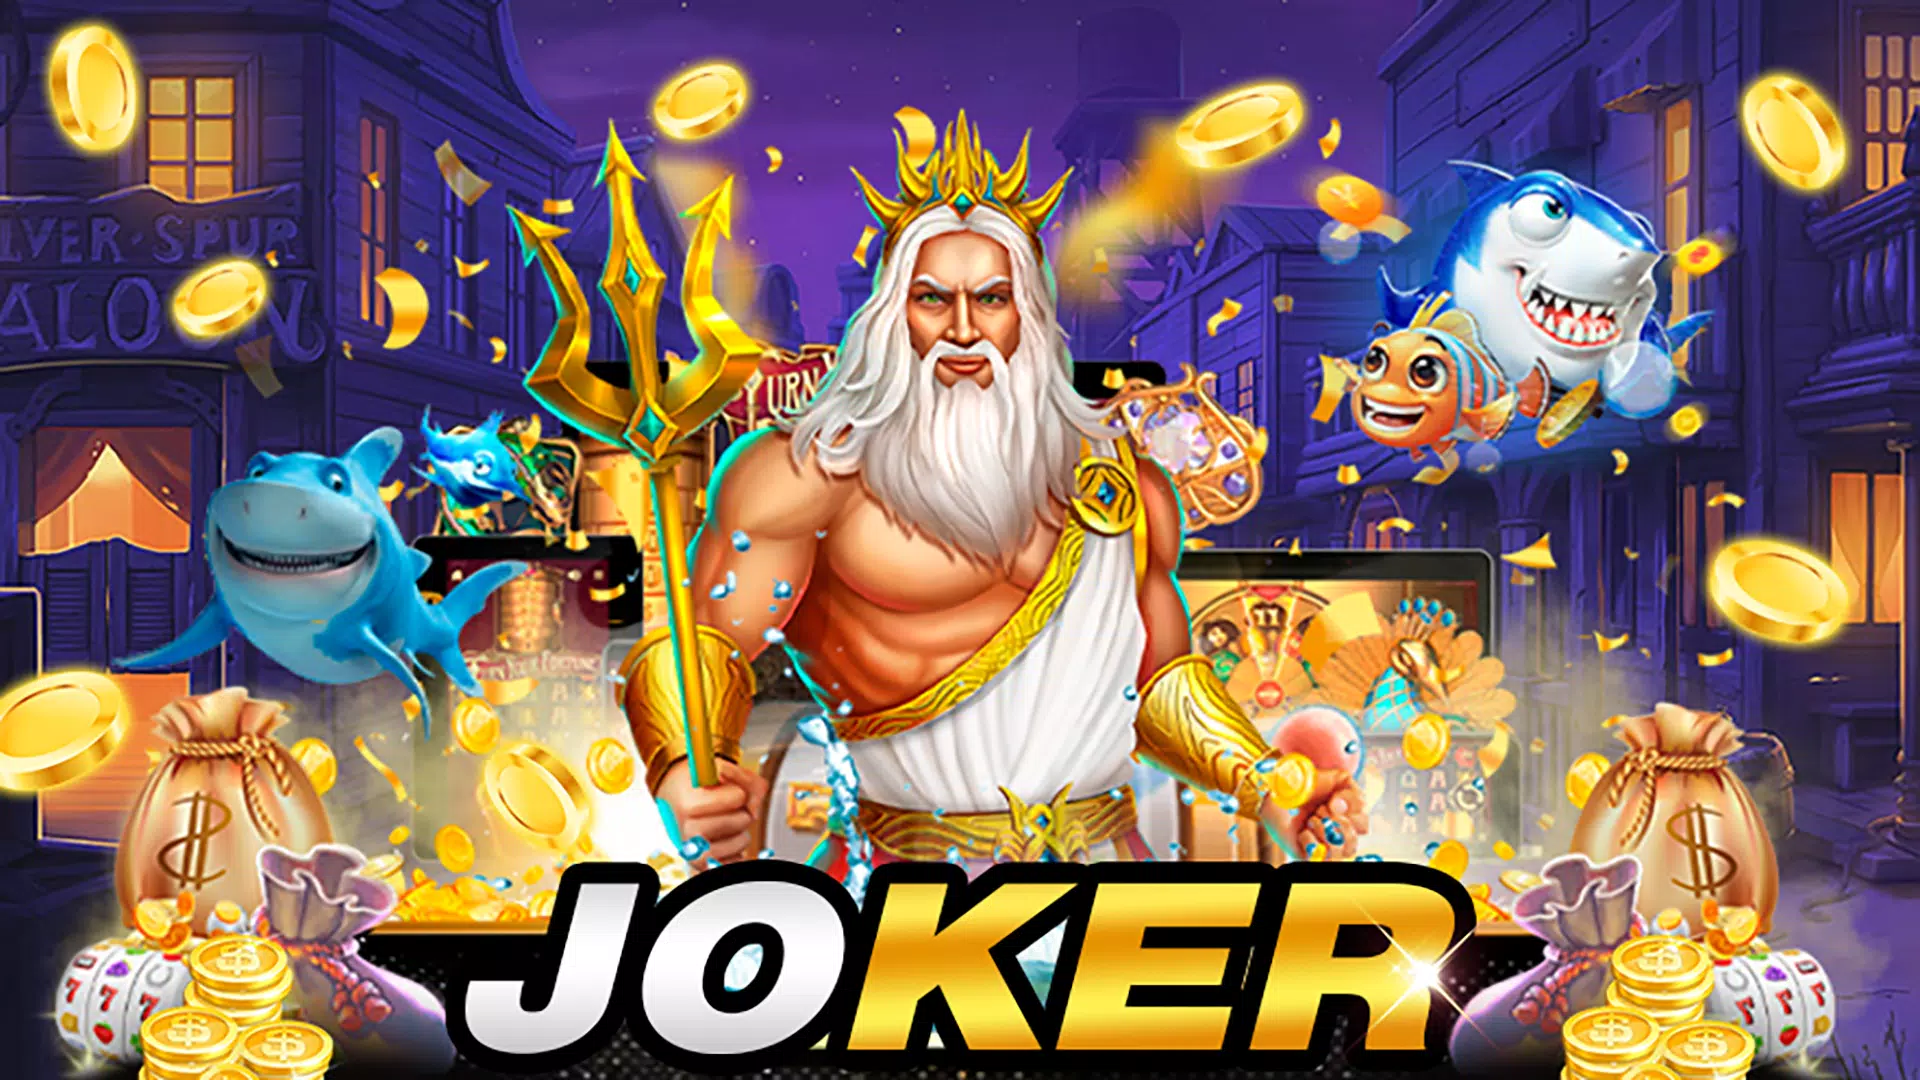 Joker Gaming - Joker Gaming added a new photo.